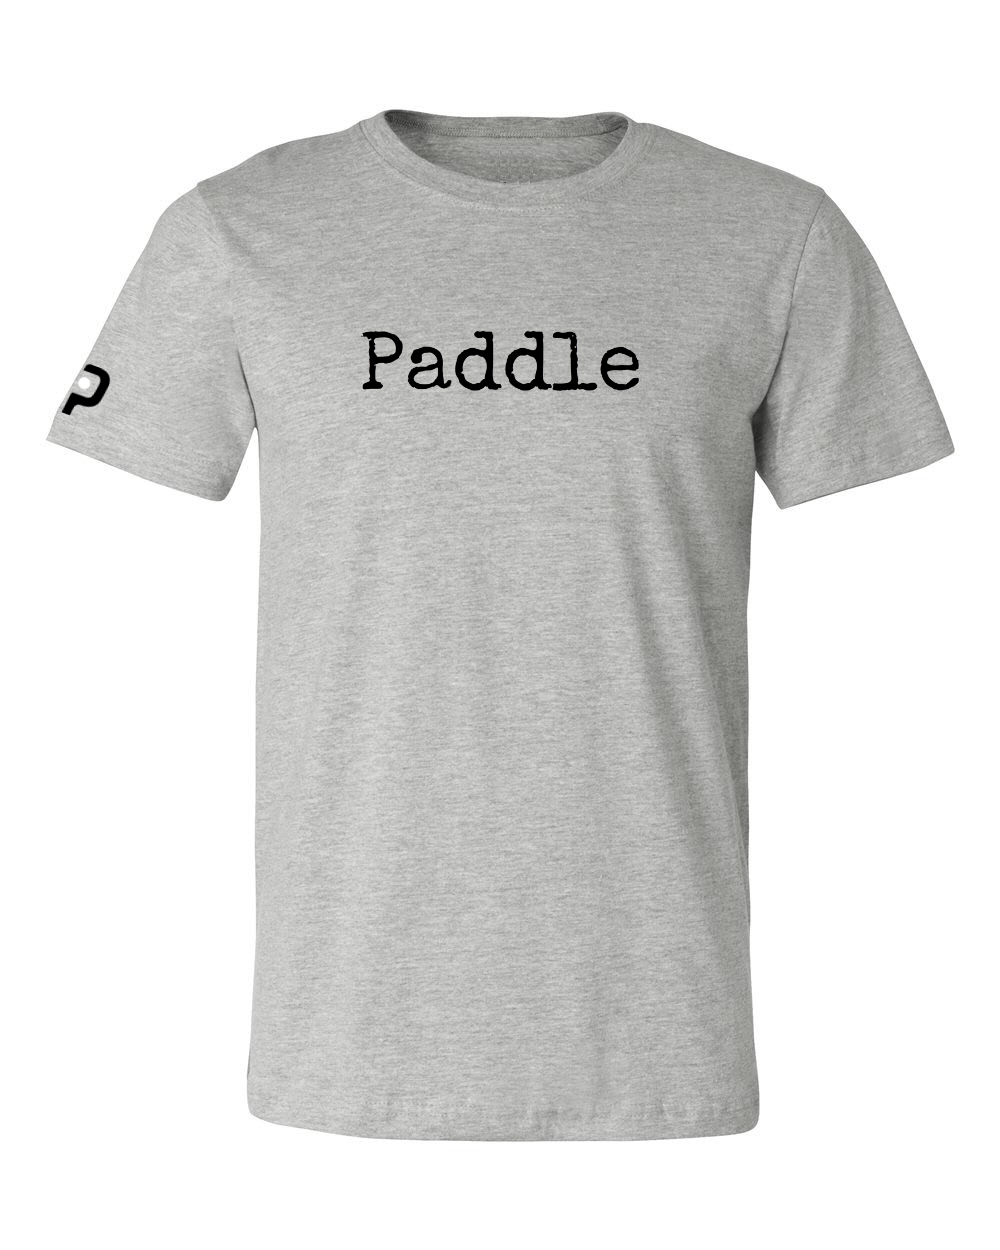 "Paddle" Classic T-Shirt